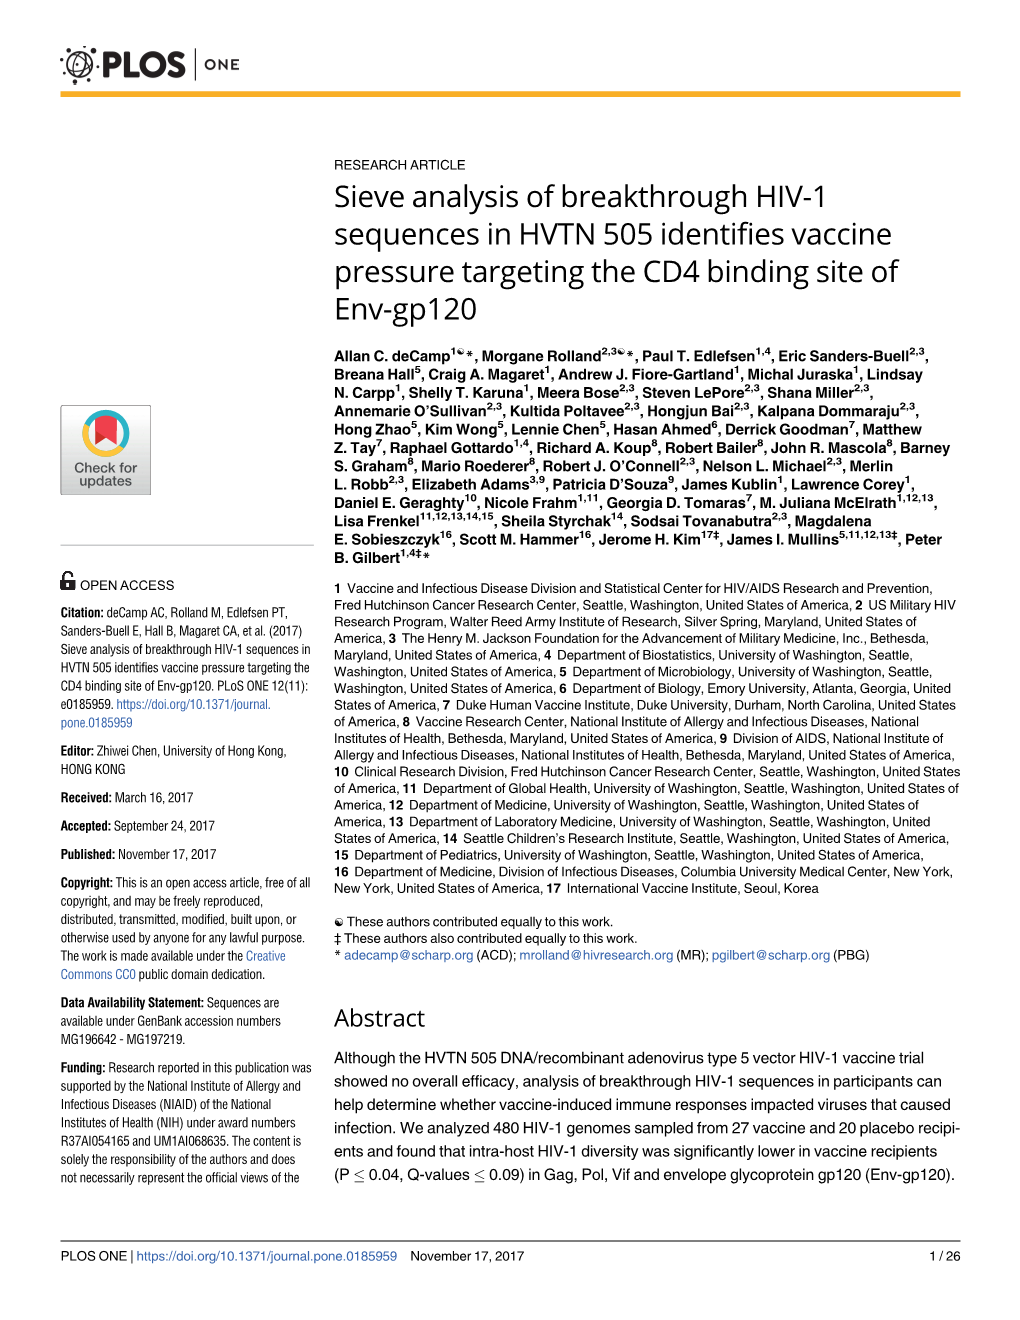 Sieve Analysis of Breakthrough HIV-1 Sequences in HVTN 505 Identifies Vaccine Pressure Targeting the CD4 Binding Site of Env-Gp120